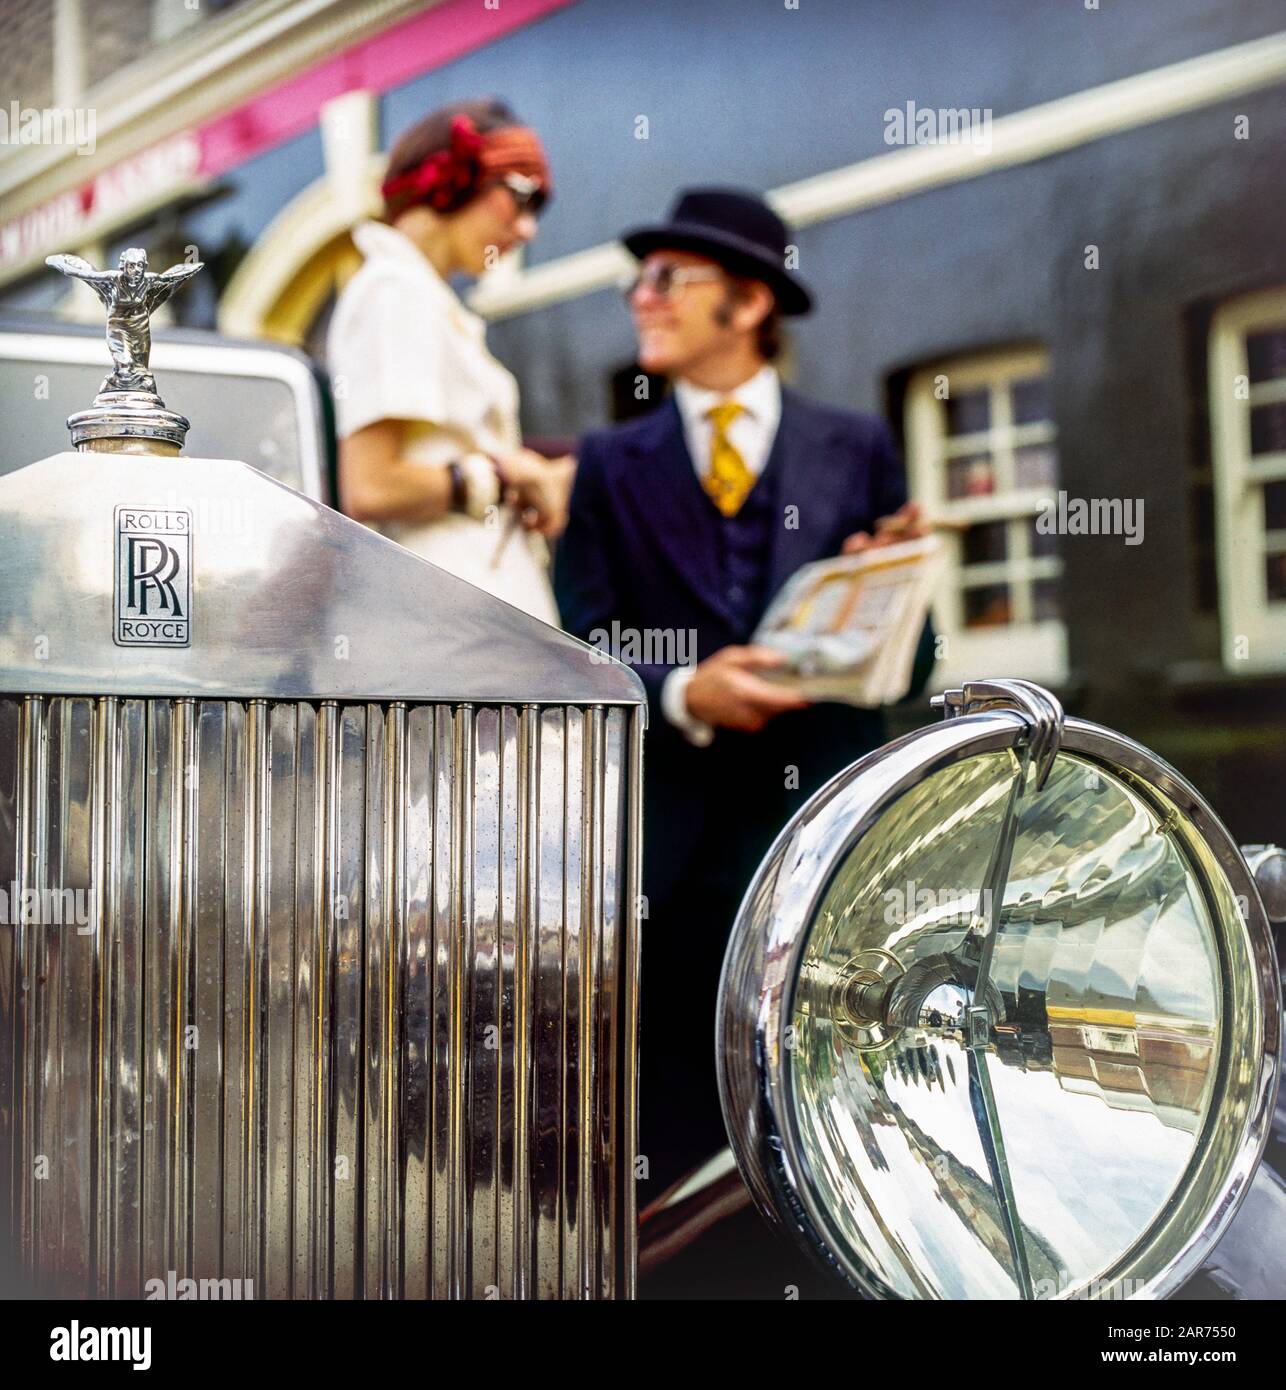 London 1970s, 1936 Rolls-Royce radiator grill, headlight, Spirit of Ecstasy statue, hood ornament, mascot, blurred elegant couple, England, UK, GB, Great Britain, Stock Photo